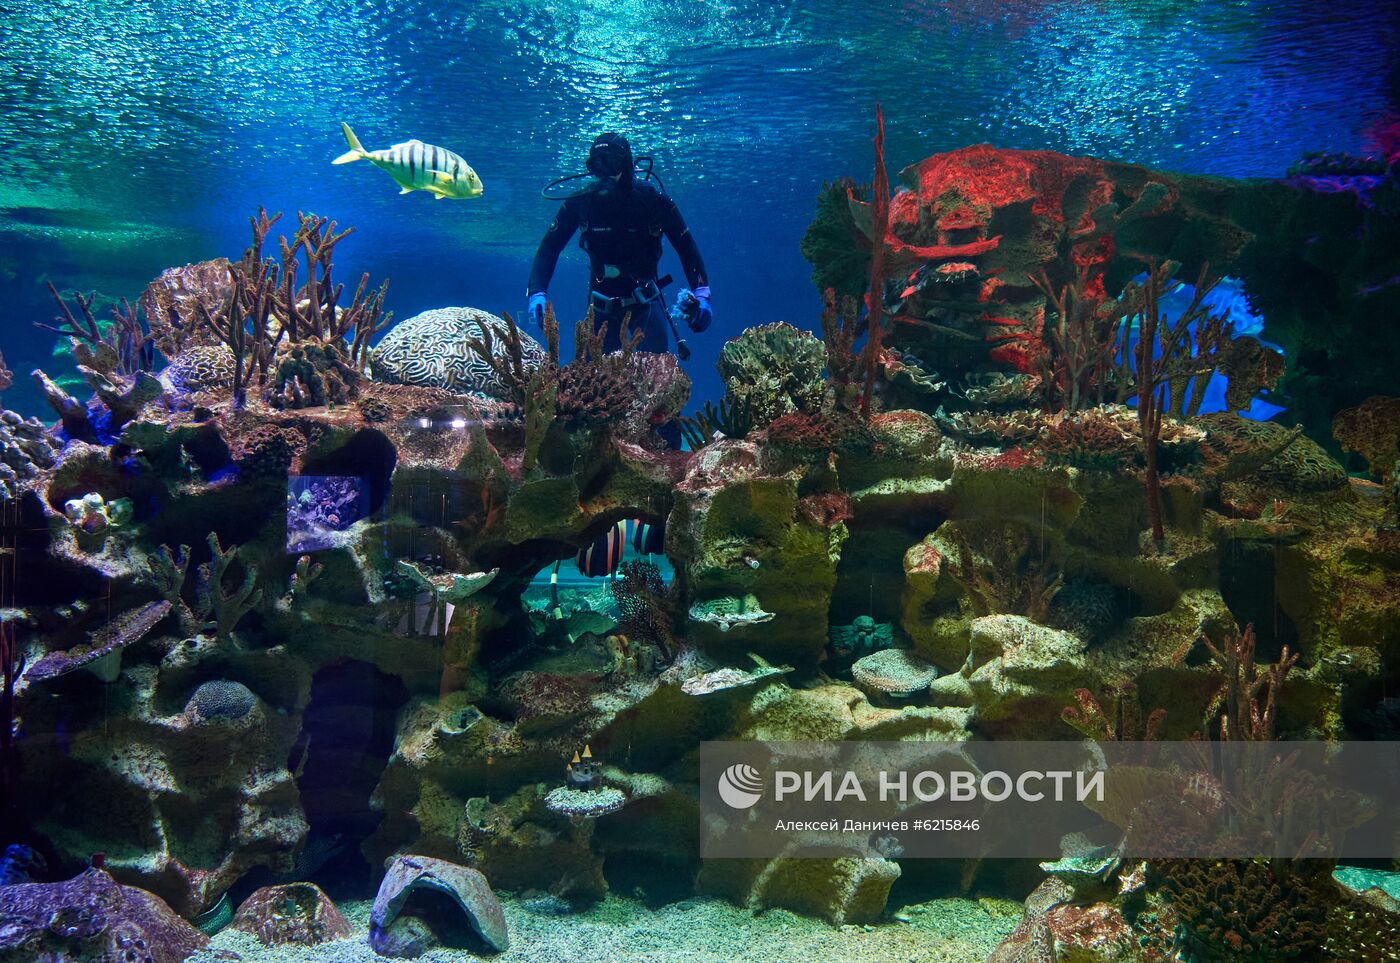 Санкт-Петербургский Океанариум во время пандемии коронавируса